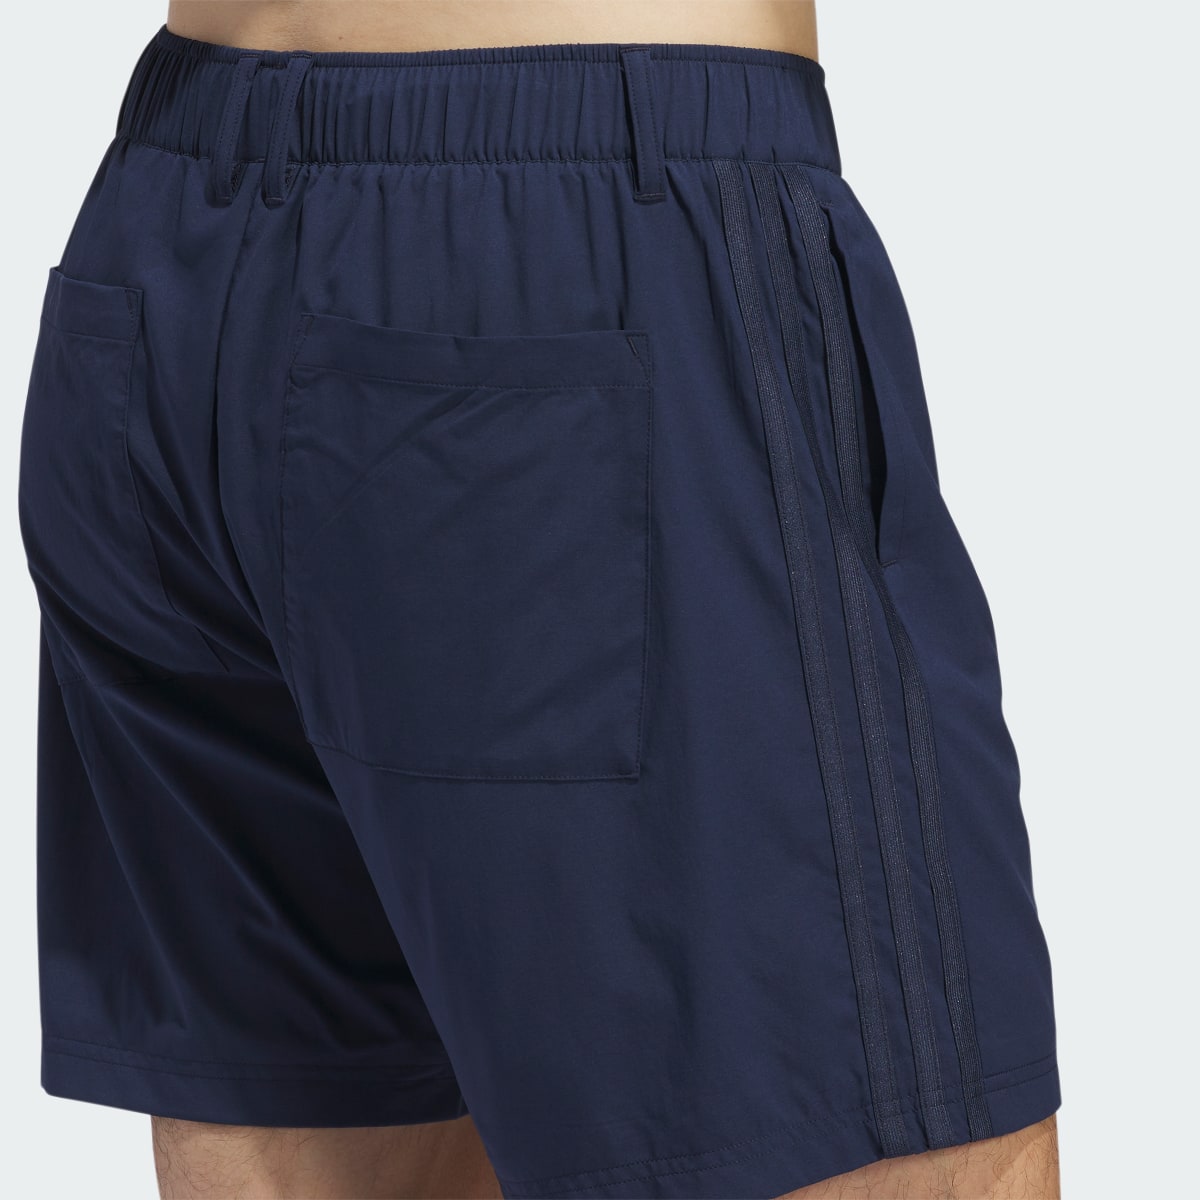 Adidas Ultimate365 Shorts. 6